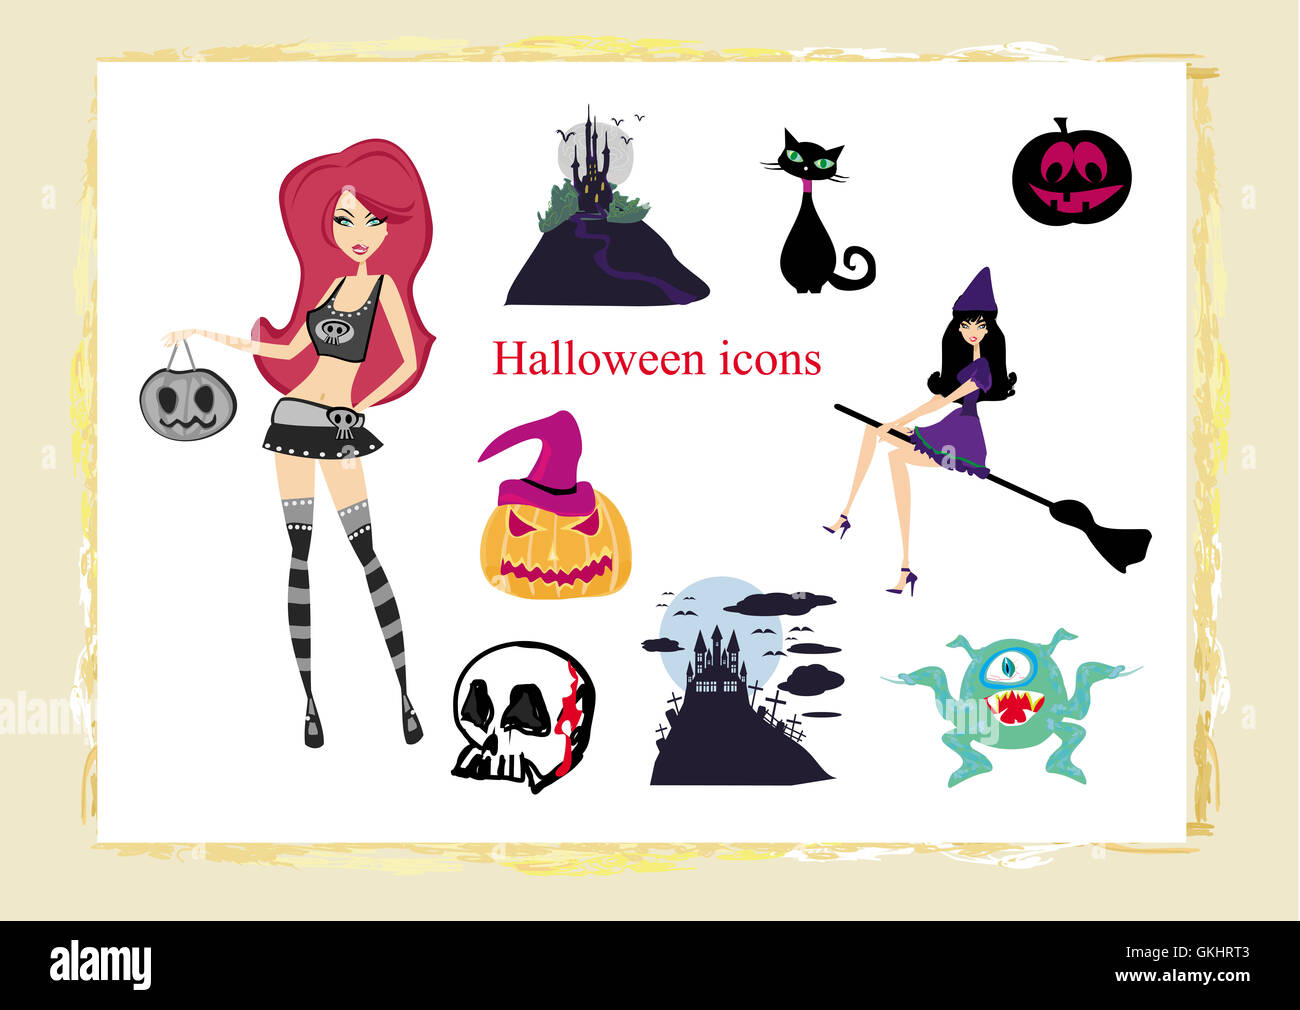 Halloween vector icons set Stock Photo